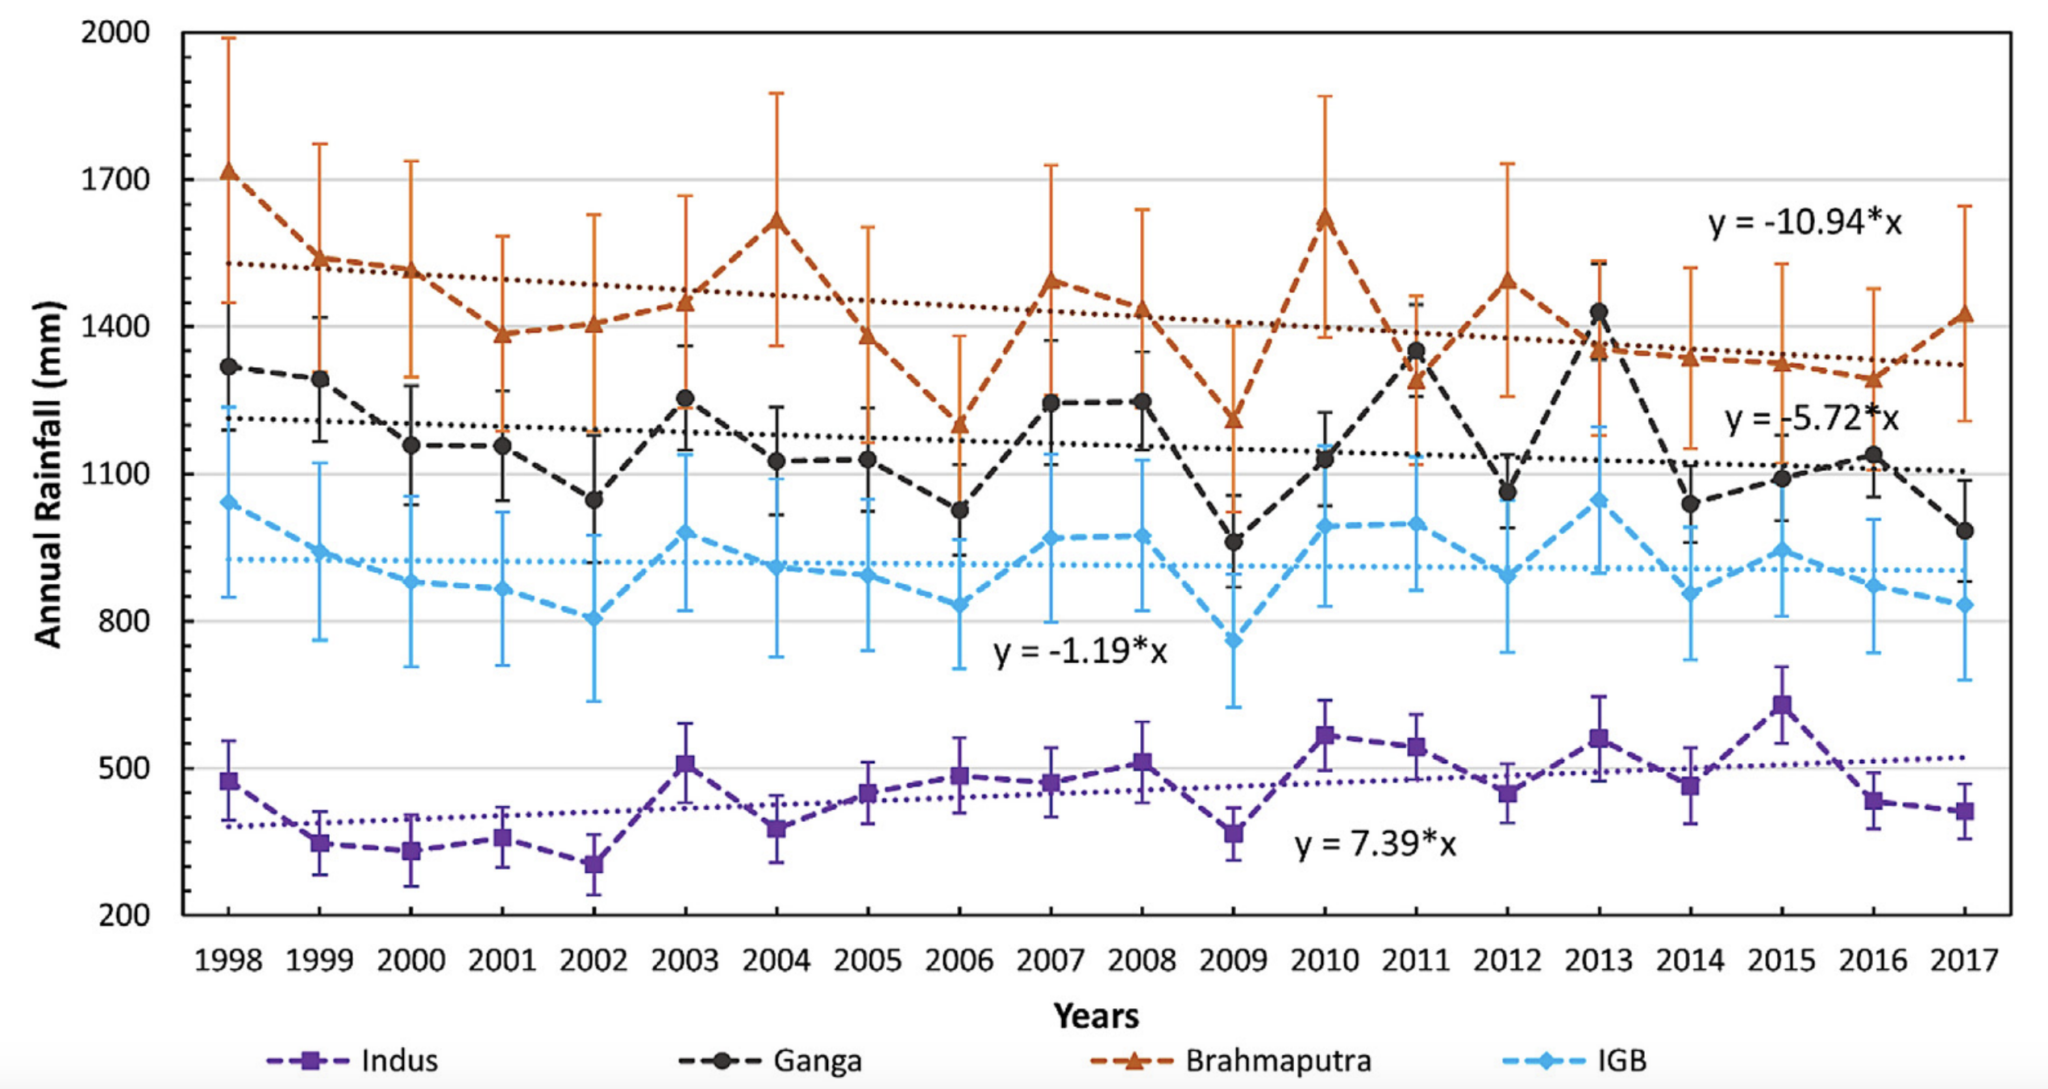 Since 1998, annual rainfall in Indus, Ganga and Brahmaputra basins has shown an overall declining trend